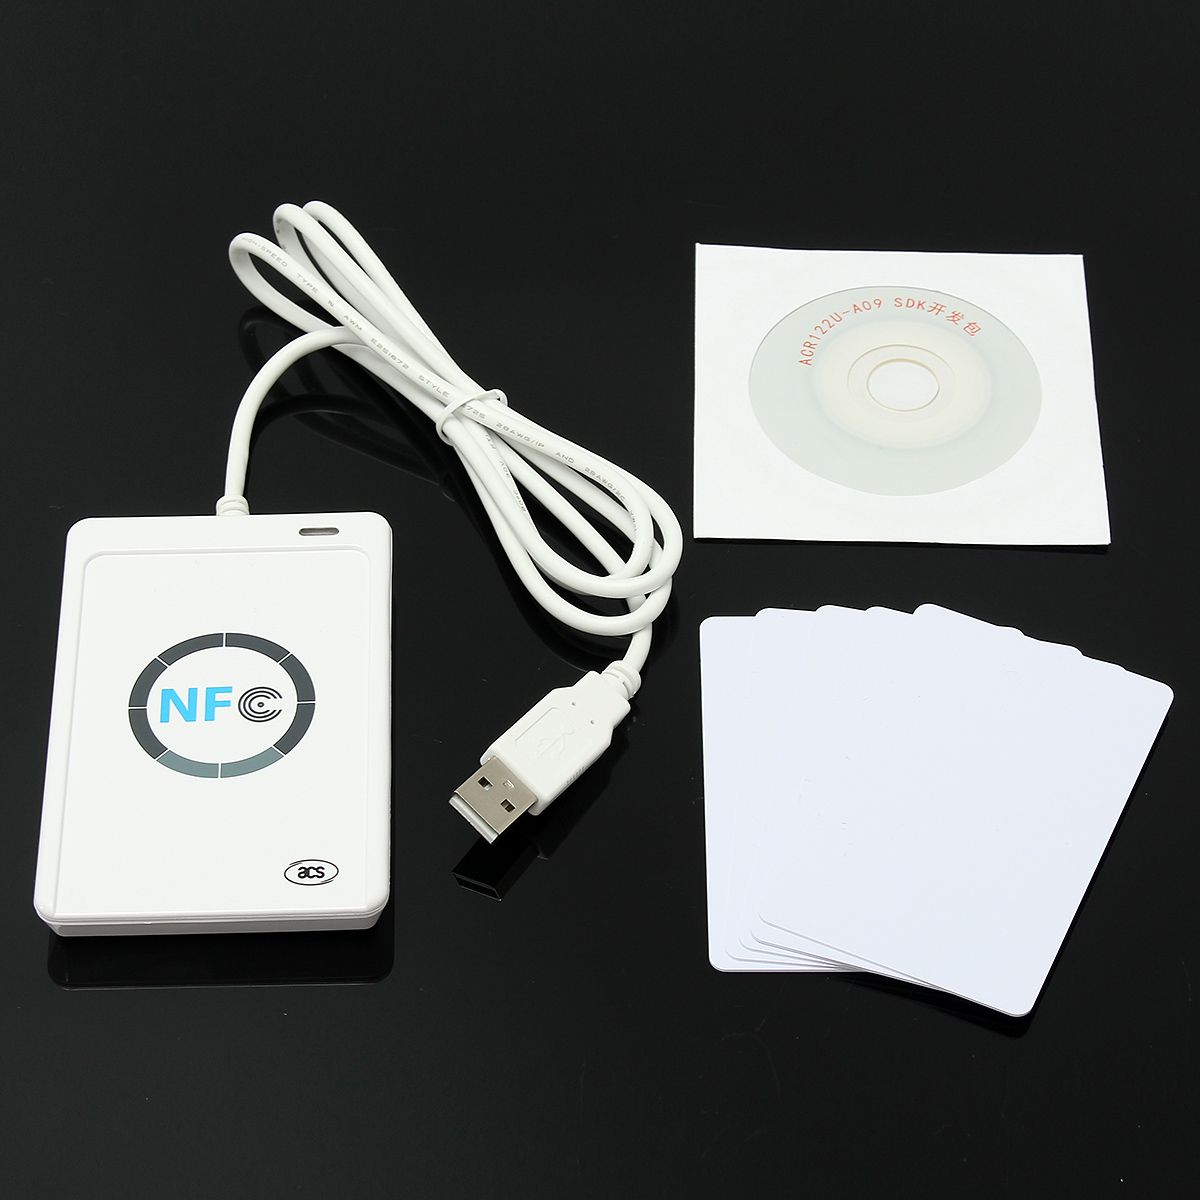 NFC-ACR122U-RFID-Contactless-Smart-Reader--WriterUSB--SDK--Mifare-IC-Card-1268520